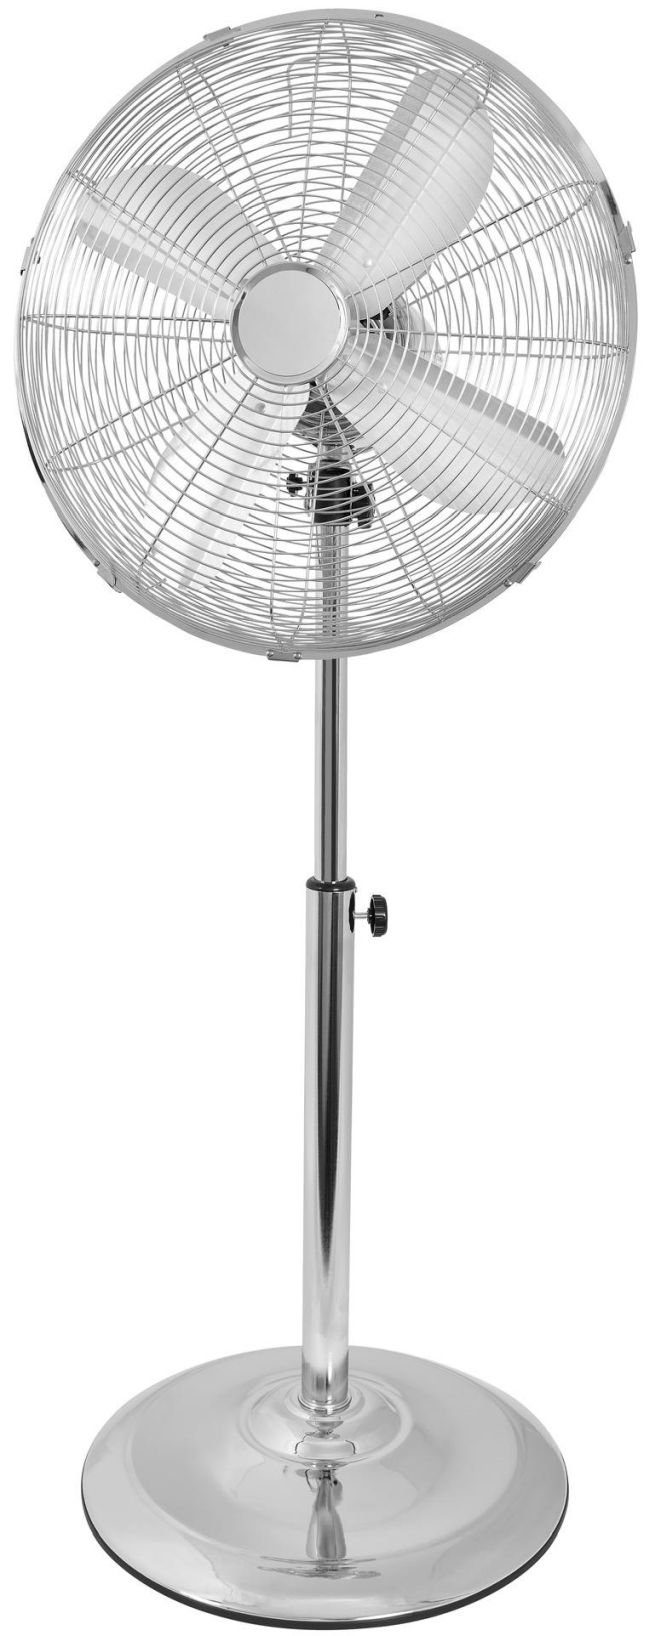 KLARBACH Standventilator Klarbach Ventilator VS 36001ch Chrom Edelstahl  Standventilator 40cm